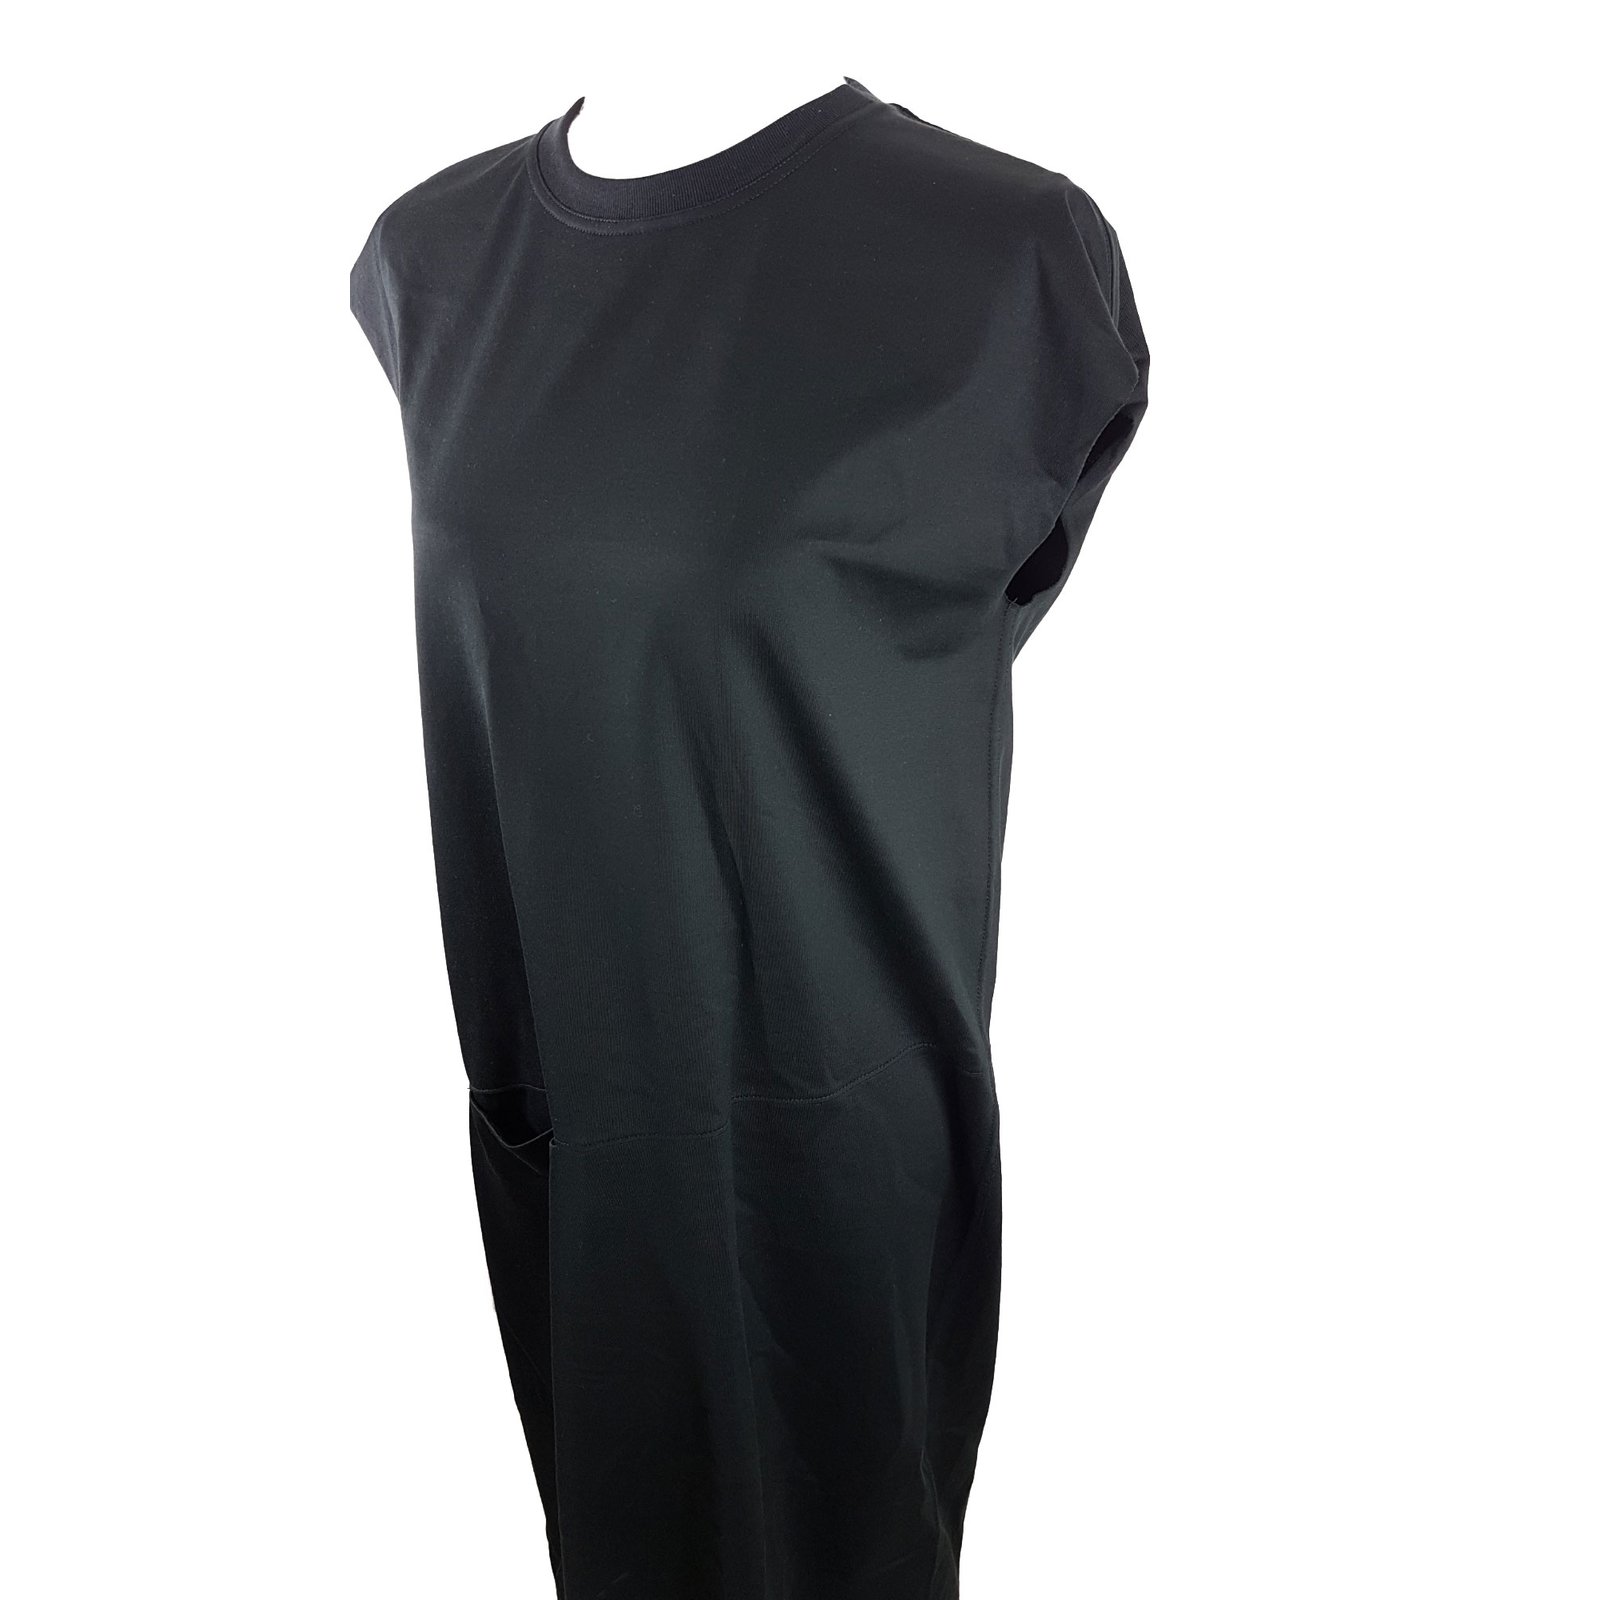 black cotton jersey dress